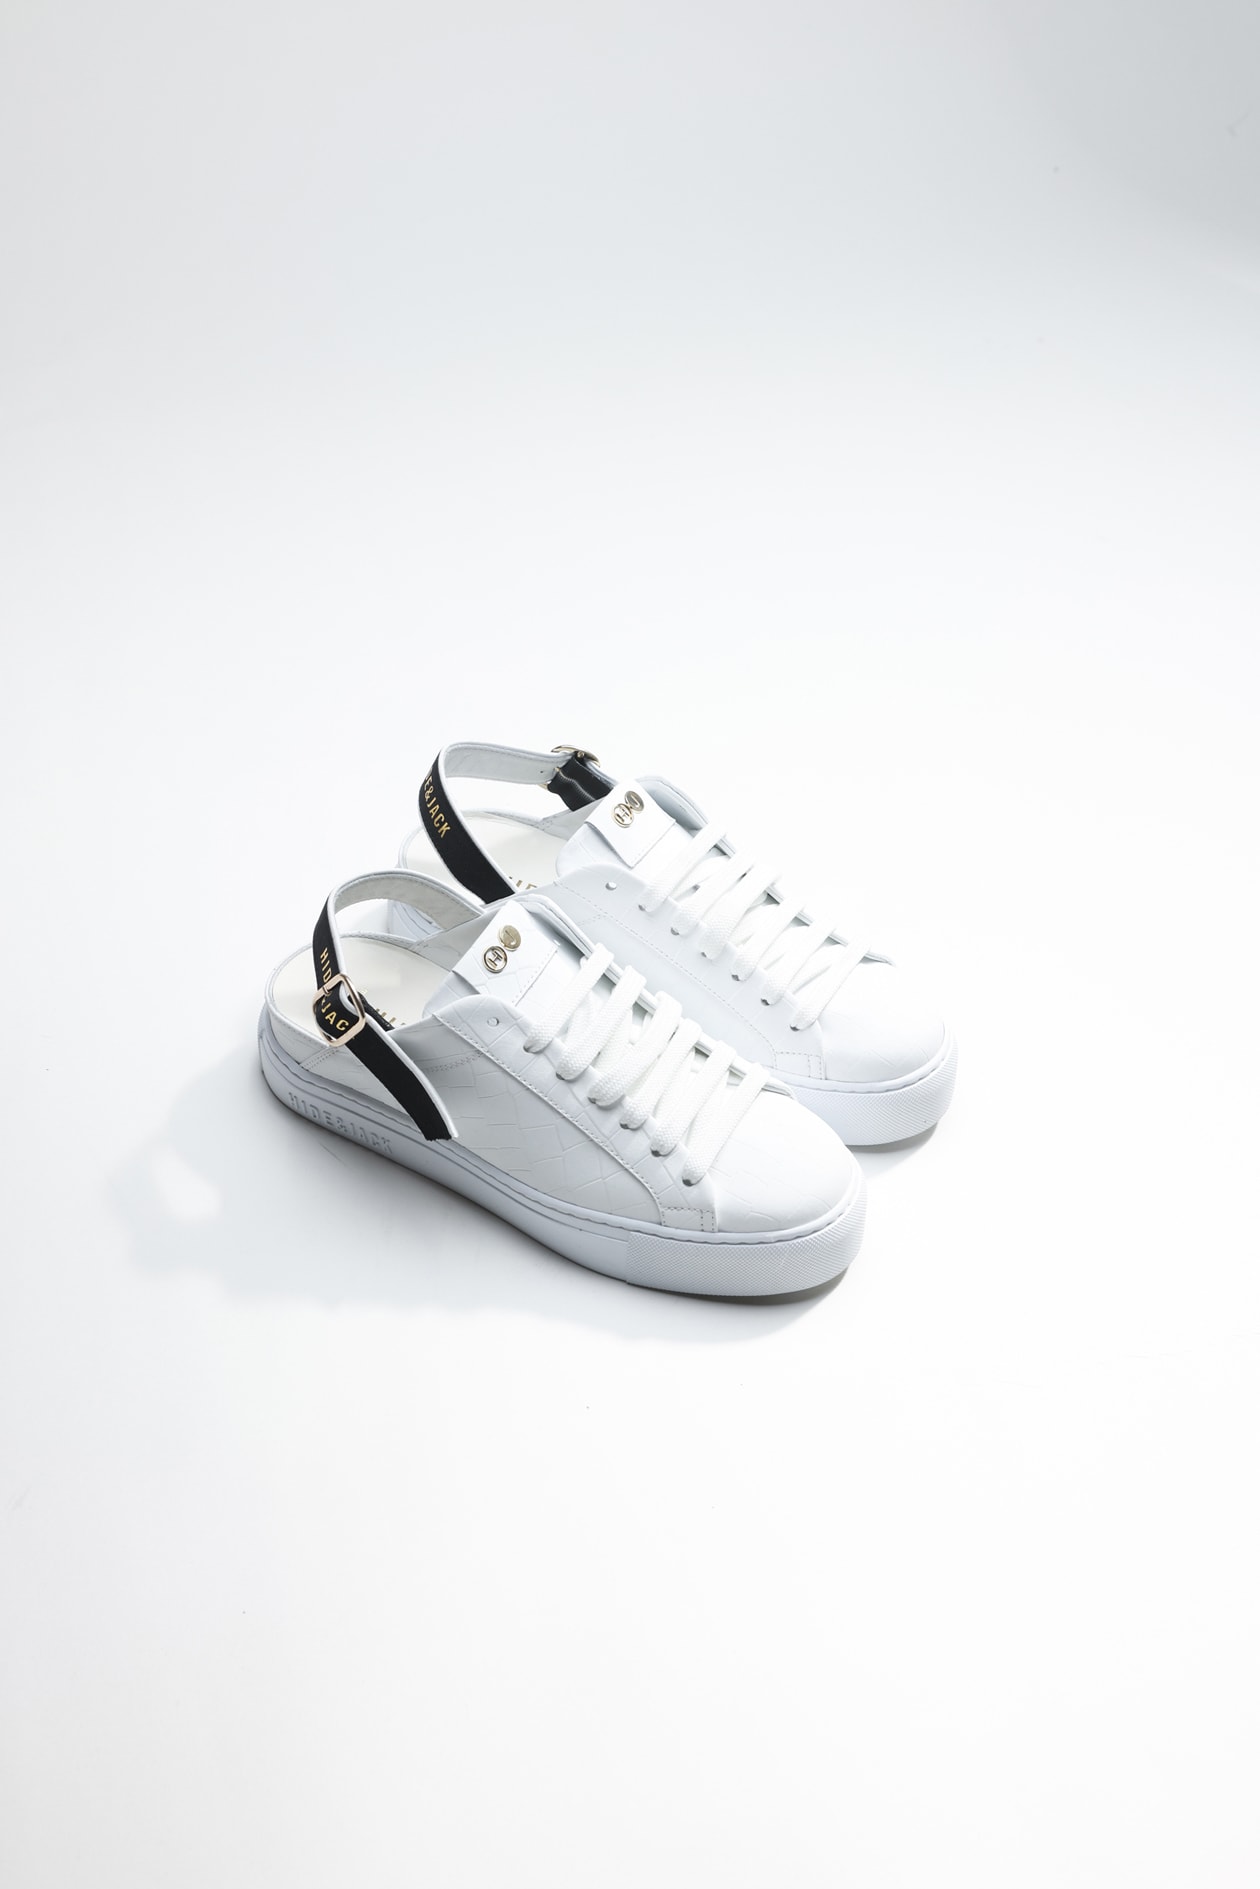 Hide & Jack Low Top Sneaker - Sabot White